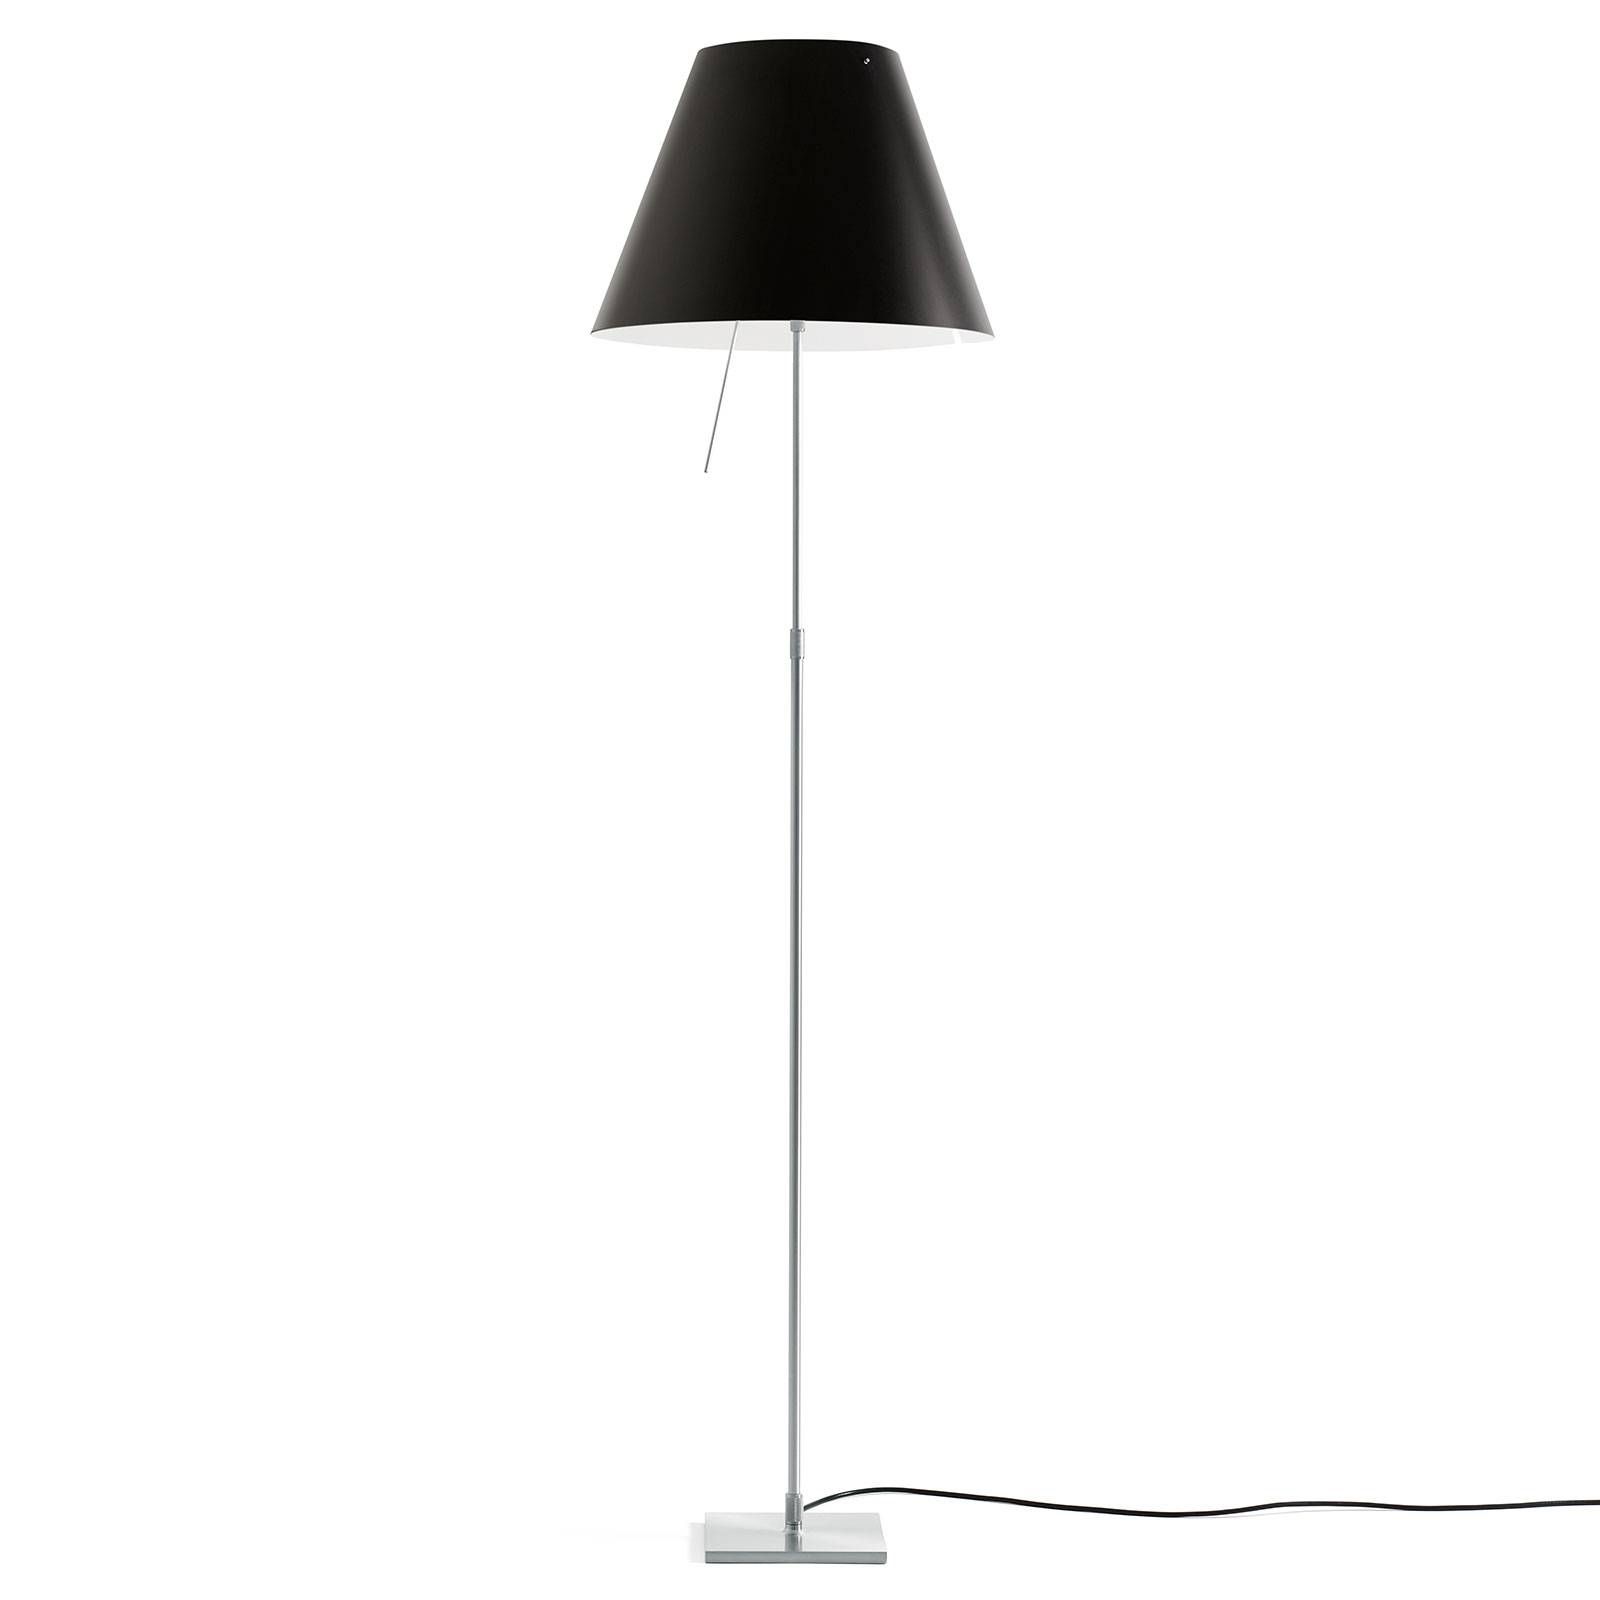 Luceplan Costanza stojaca lampa D13t, čierna, Obývacia izba / jedáleň, hliník, polykarbonát, E27, 105W, K: 160cm